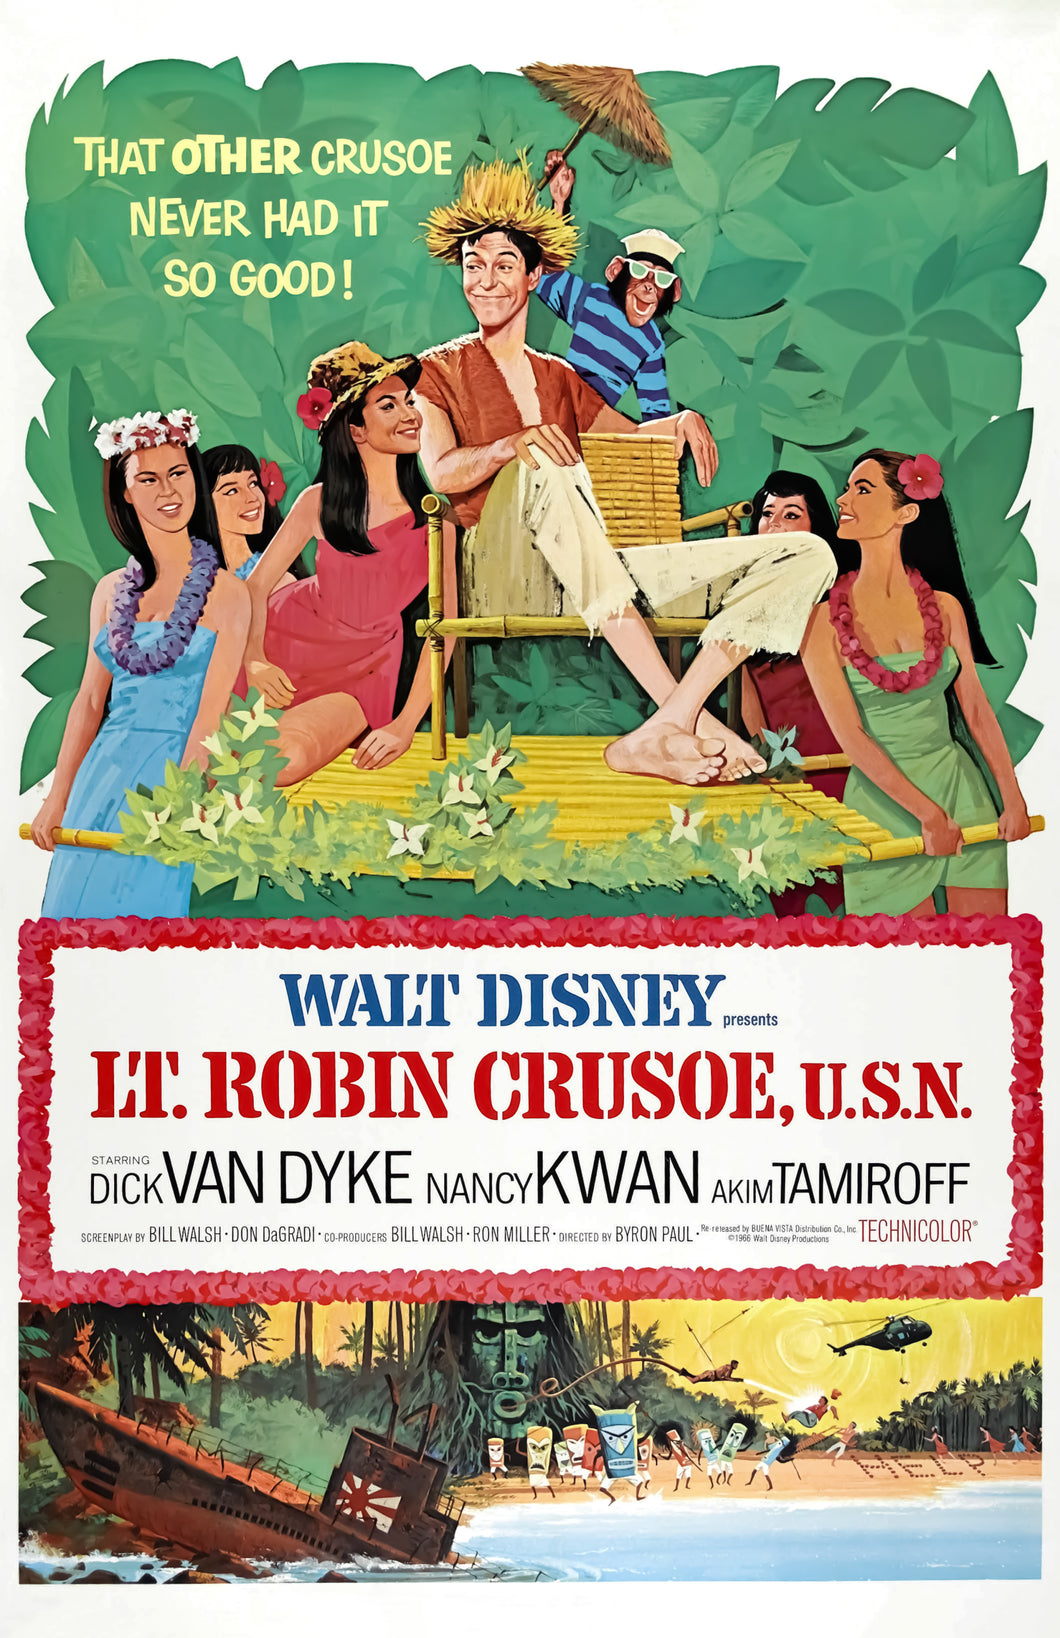 Dick Van Dyke signed LT. Robin Crusoe, U.S.N. Poster Image #2 (8x10, 11x17)